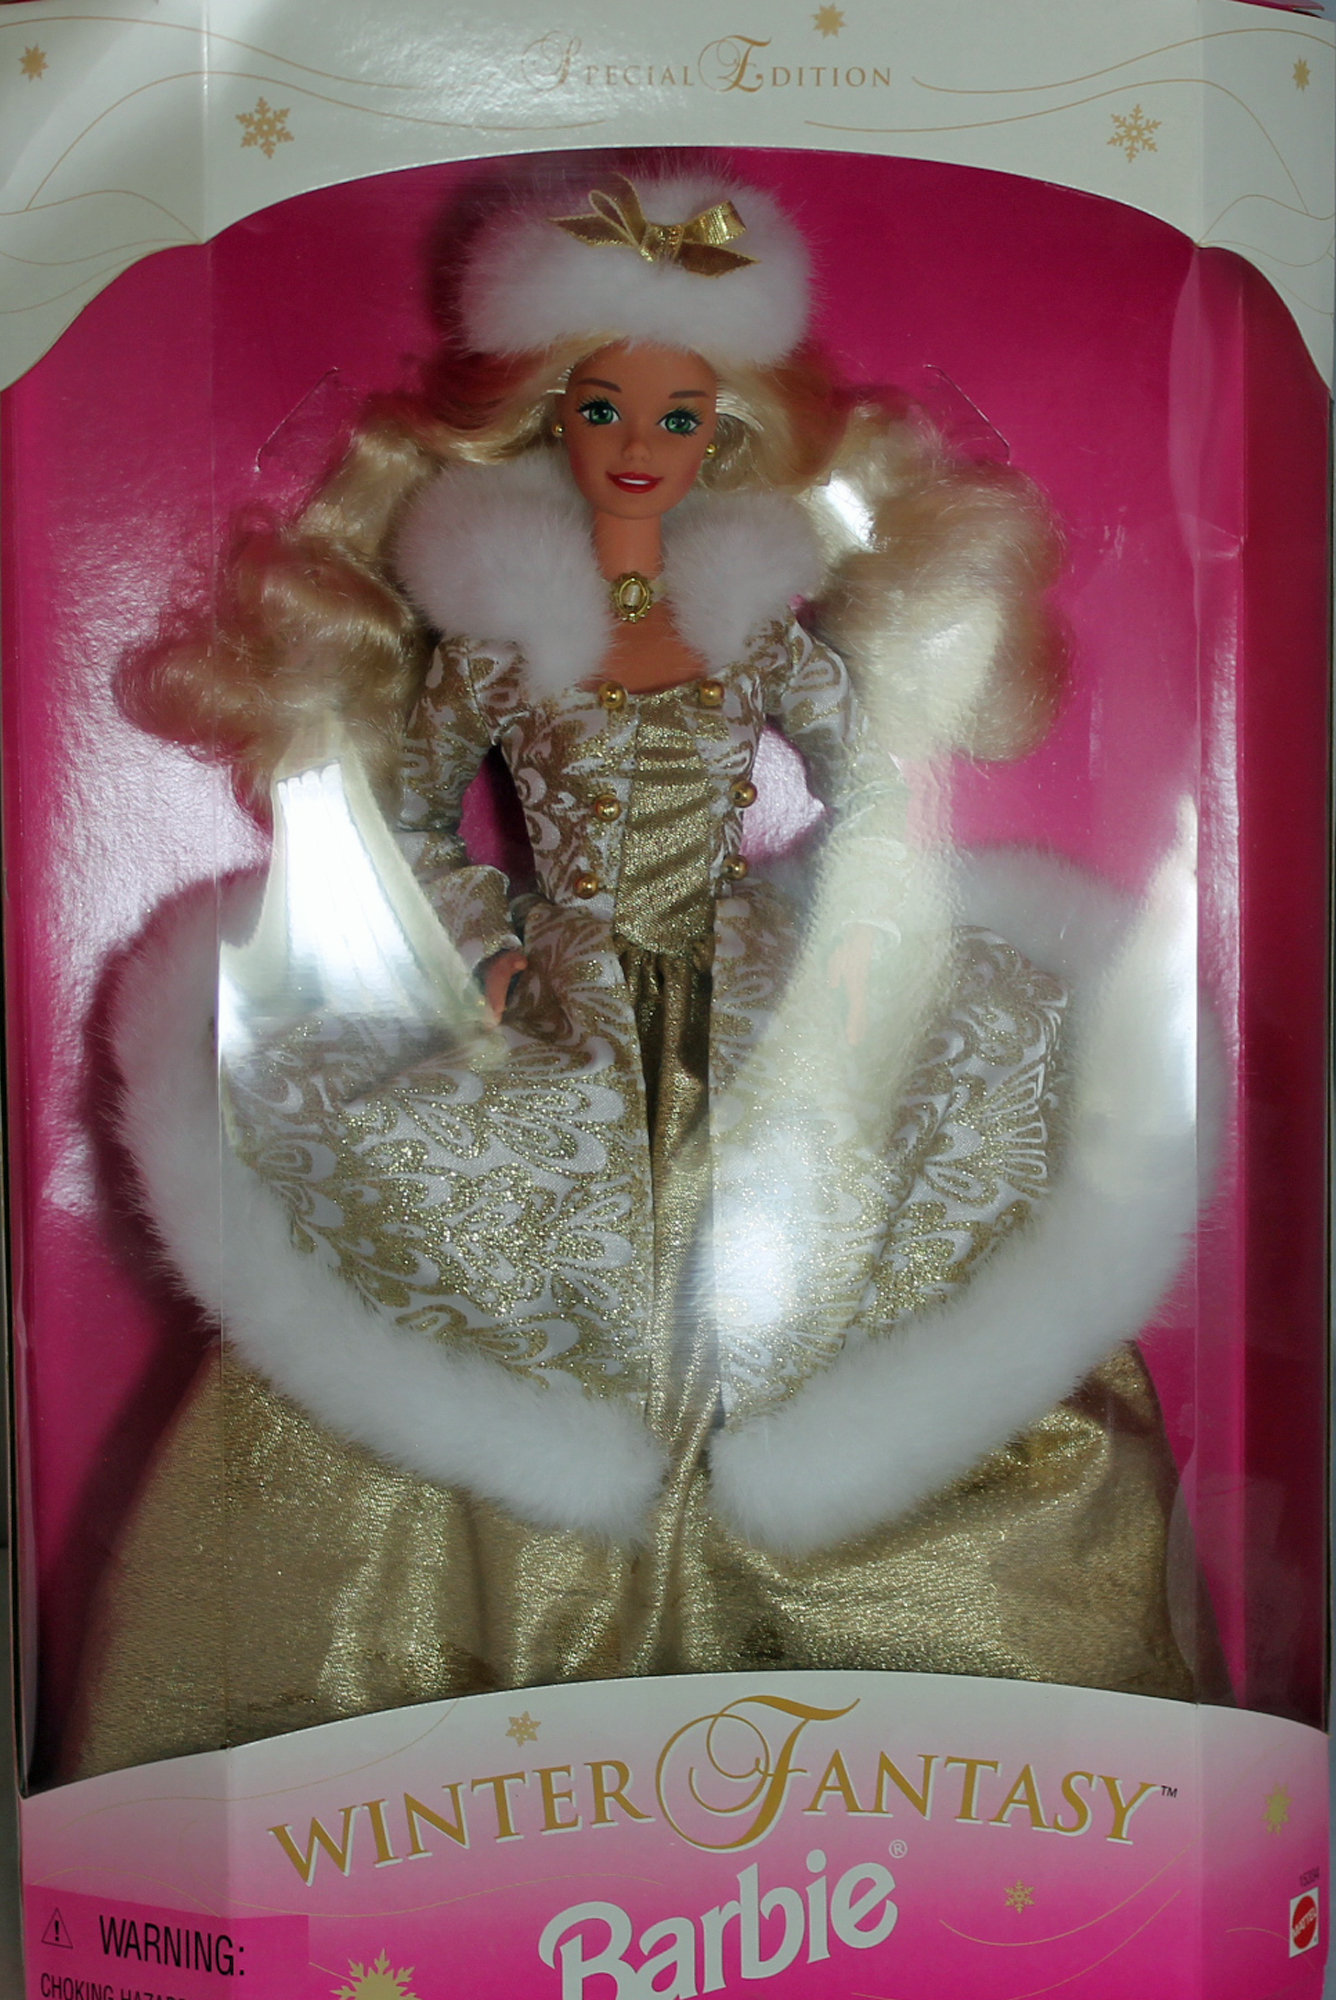 holiday dreams barbie